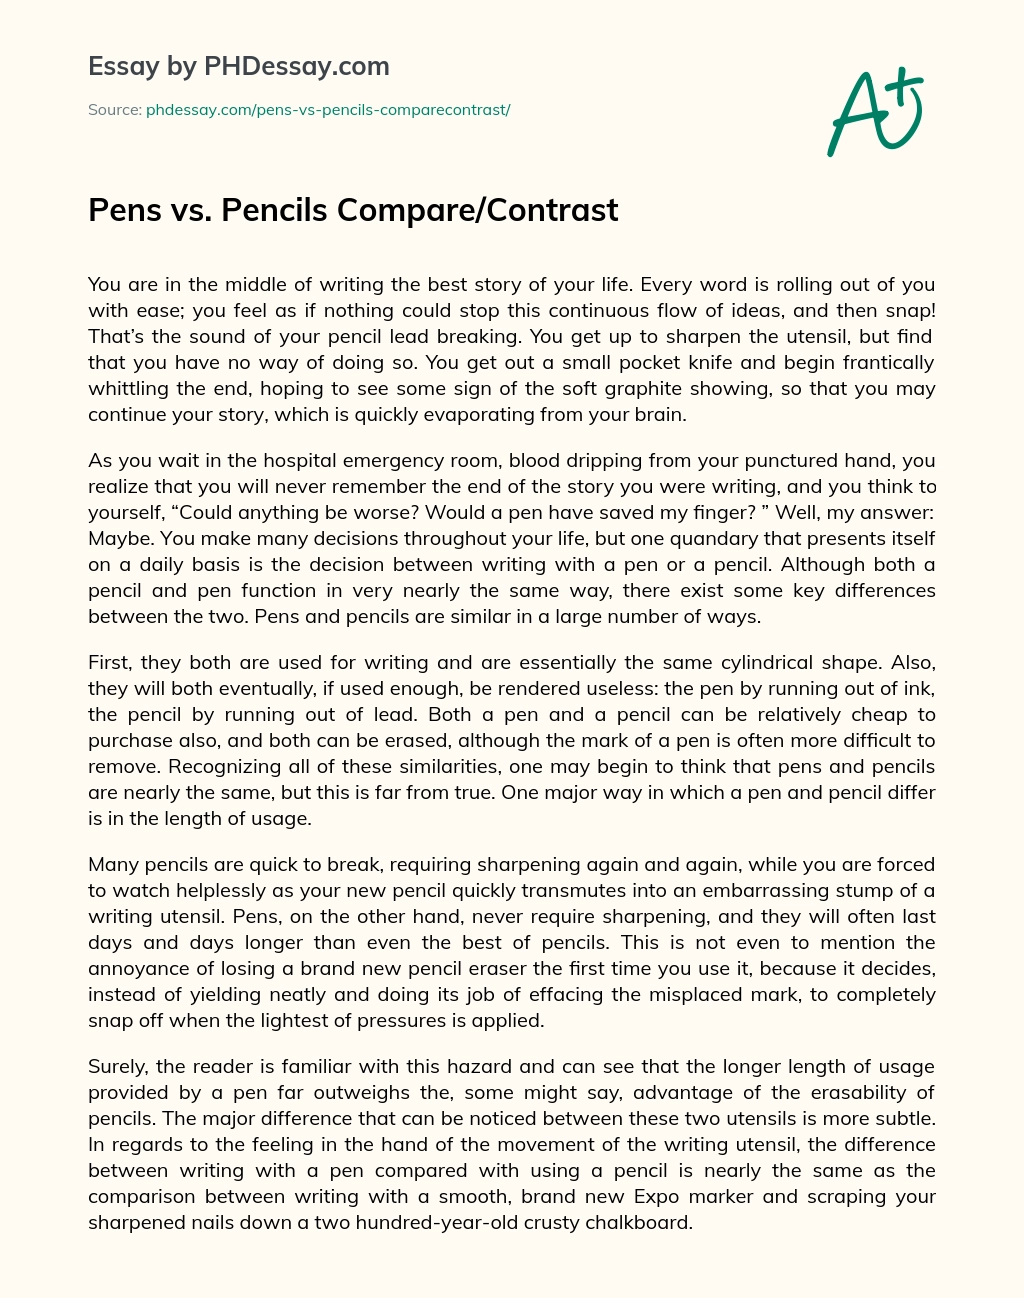 Pens vs. Pencils Compare/Contrast essay